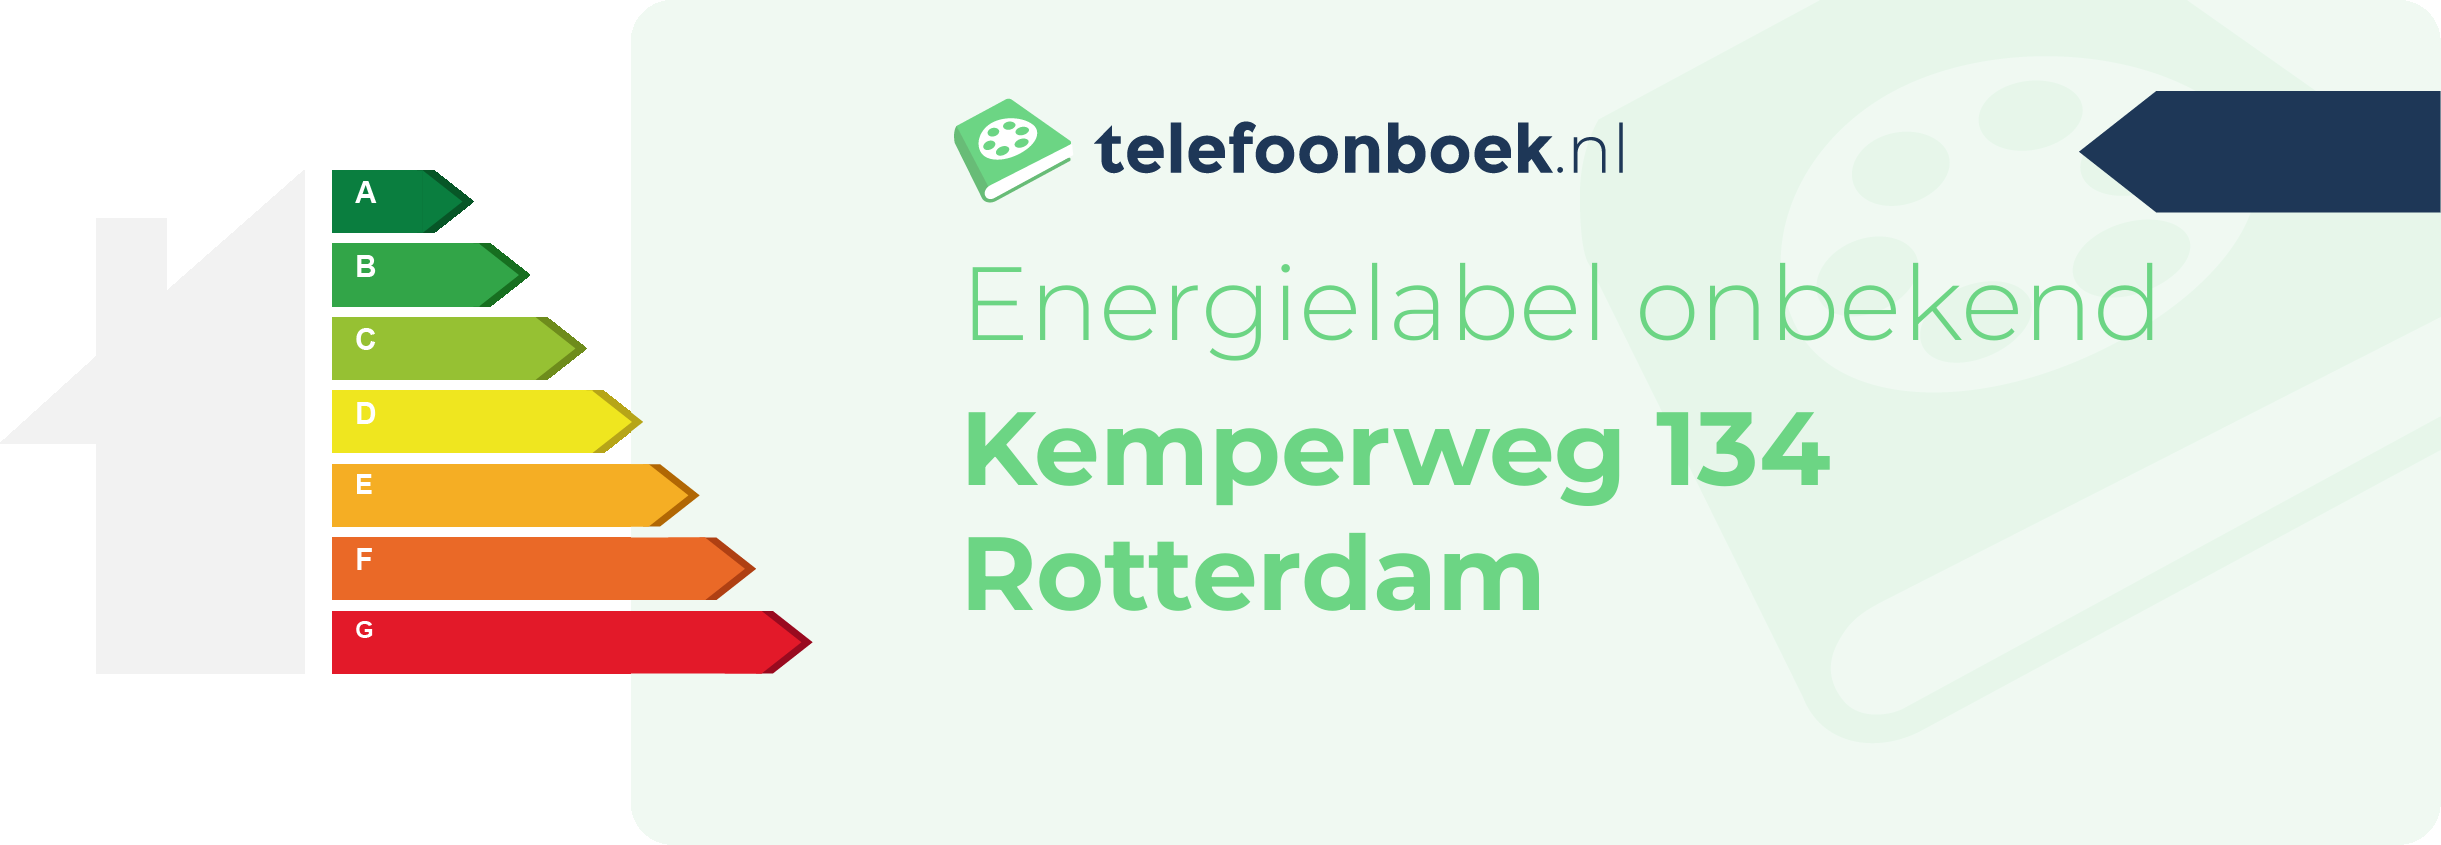 Energielabel Kemperweg 134 Rotterdam